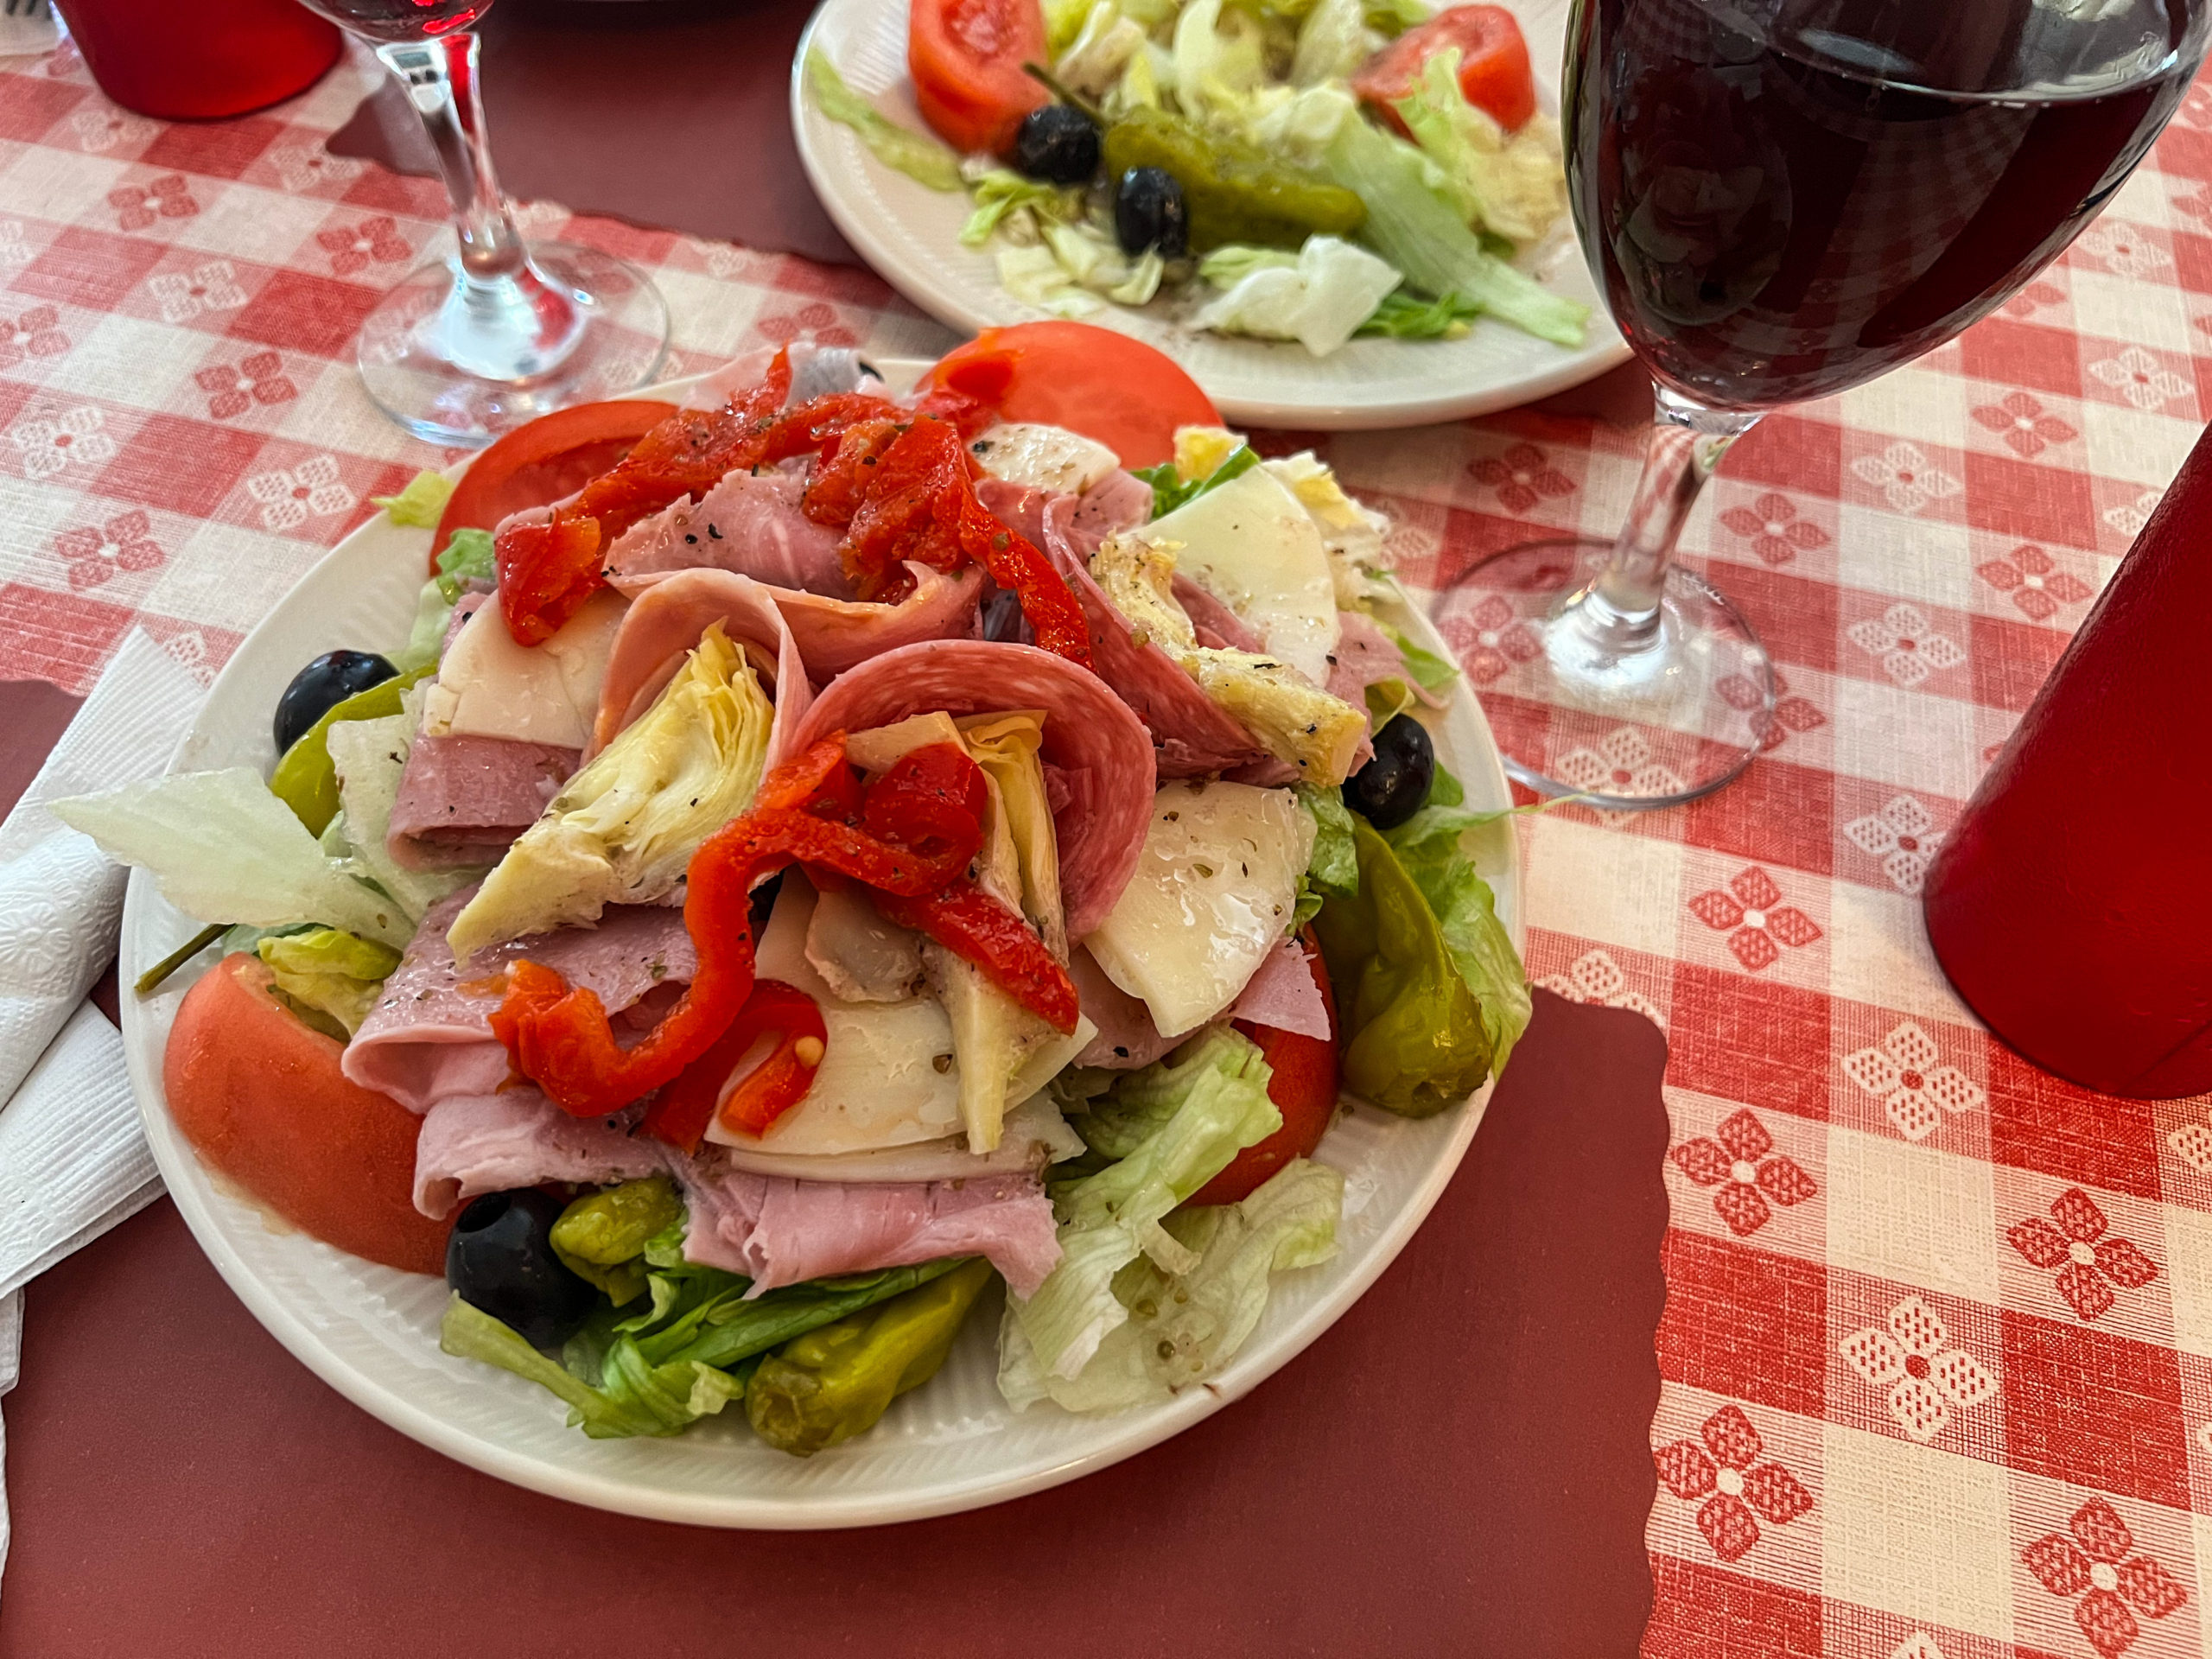 The thoughtfully arranged antipasto salad